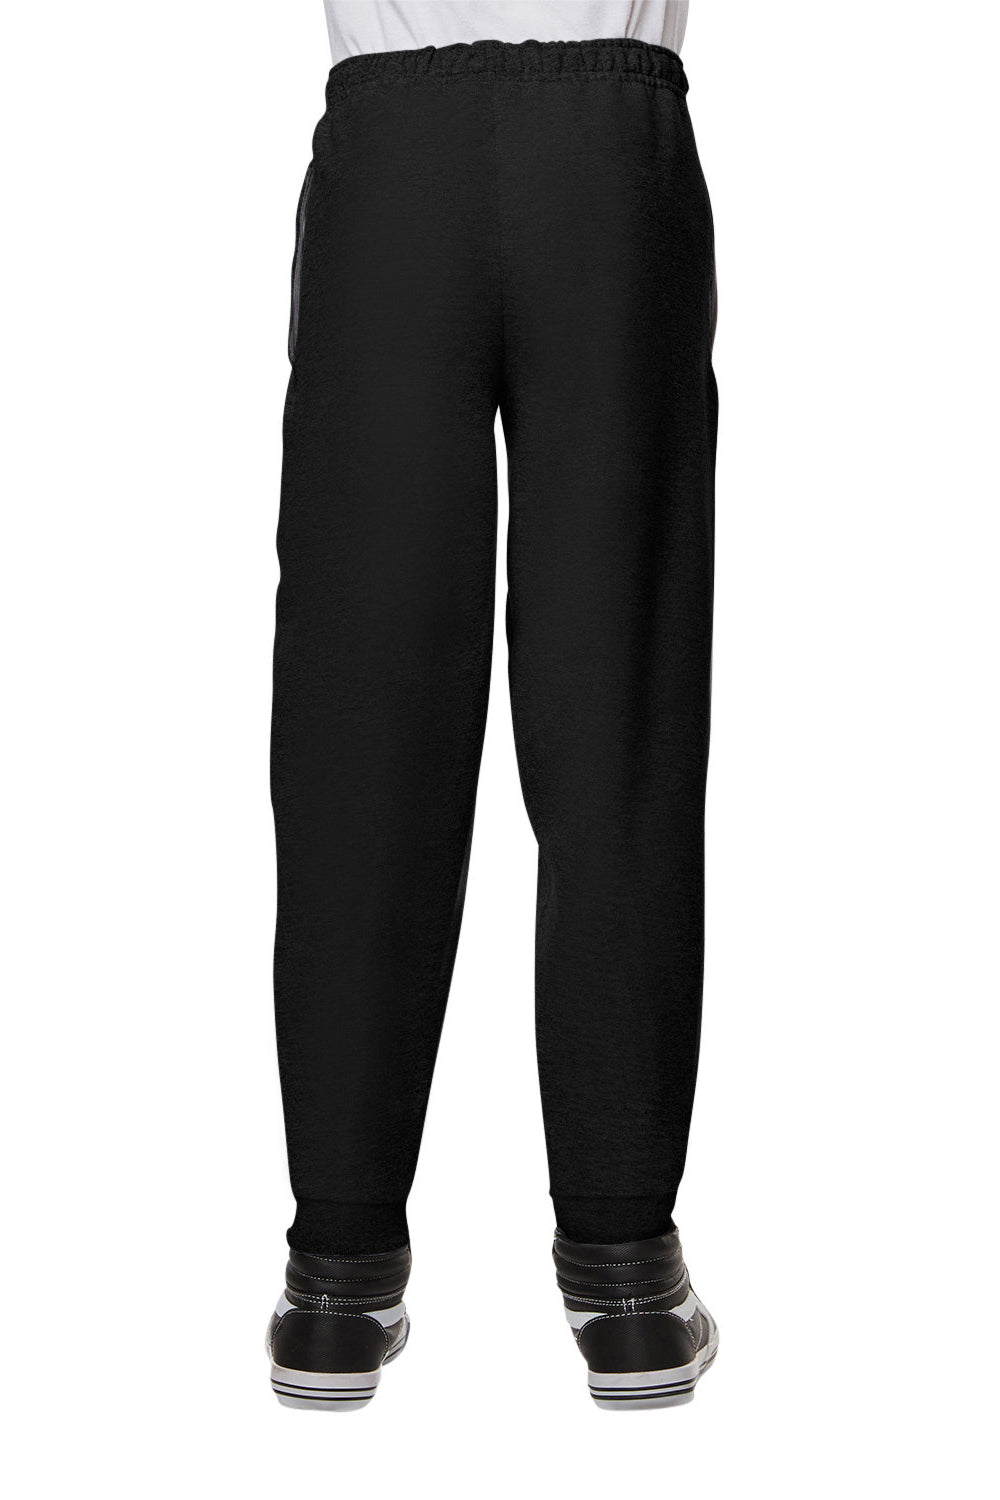 Jerzees 975YR Youth NuBlend Fleece Jogger Sweatpants w/ Pockets Black Back